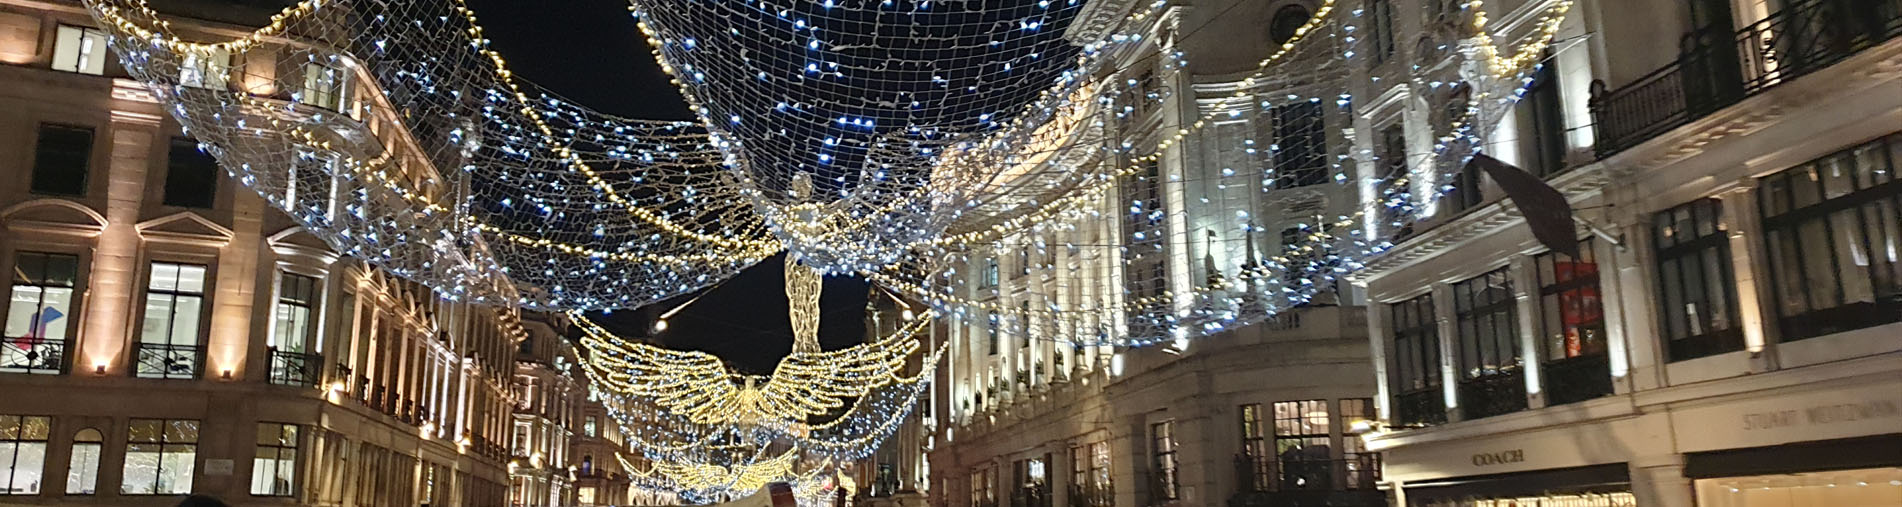 Regent St Christmas Lights 2019